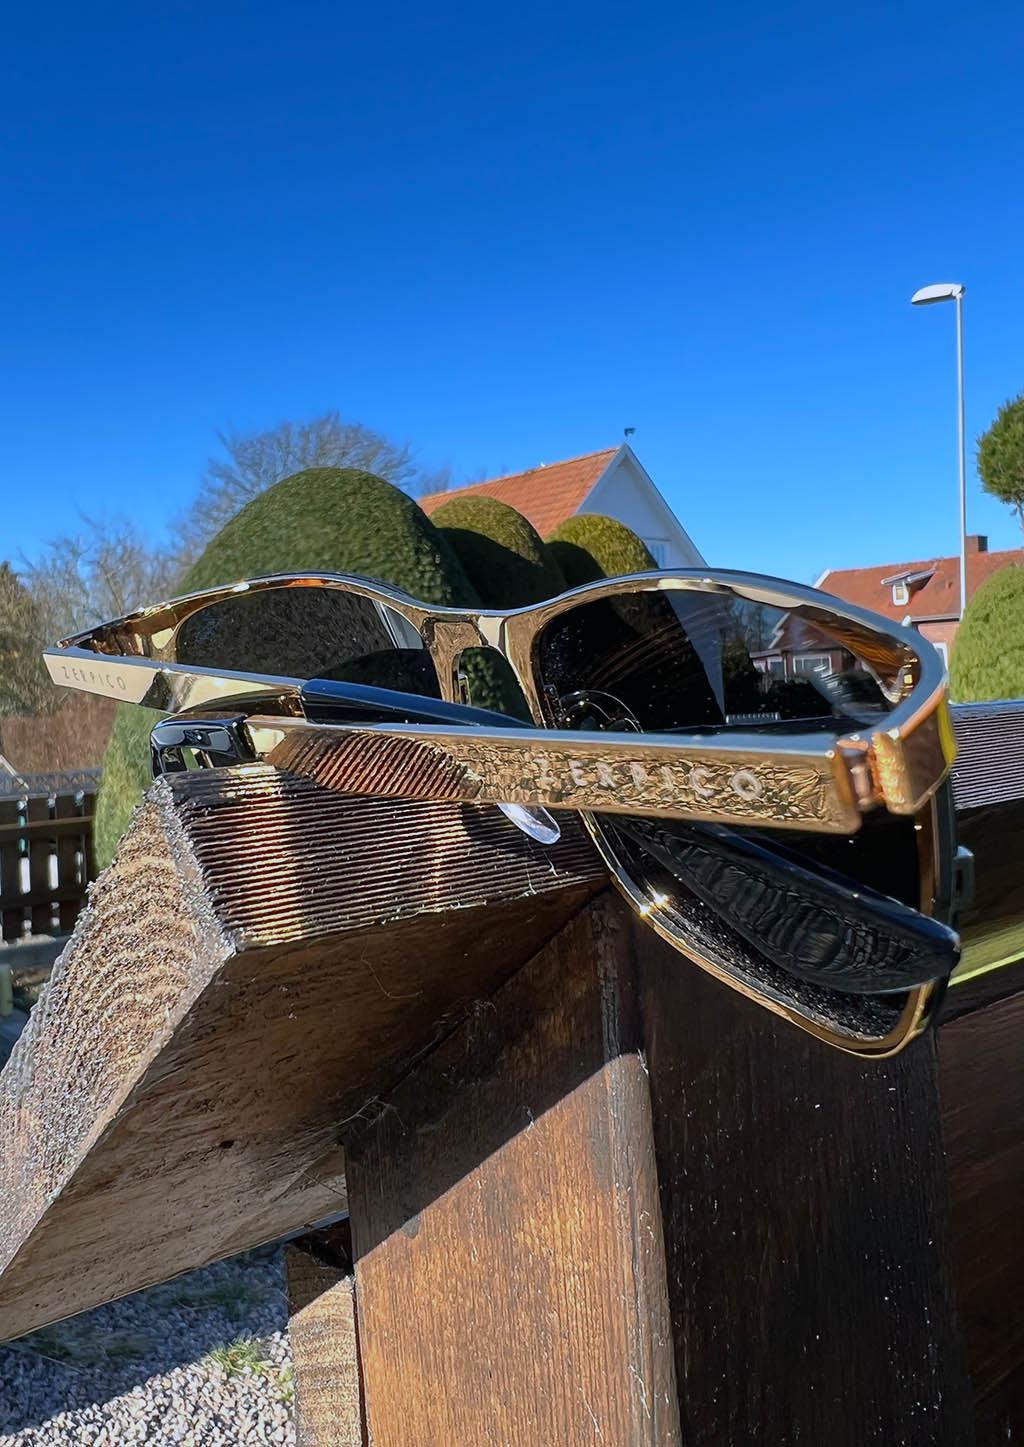 Titan - Titanium Wayfarer Sunglasses V2 - 24K Gold Plated with real gold. Closeup with details.